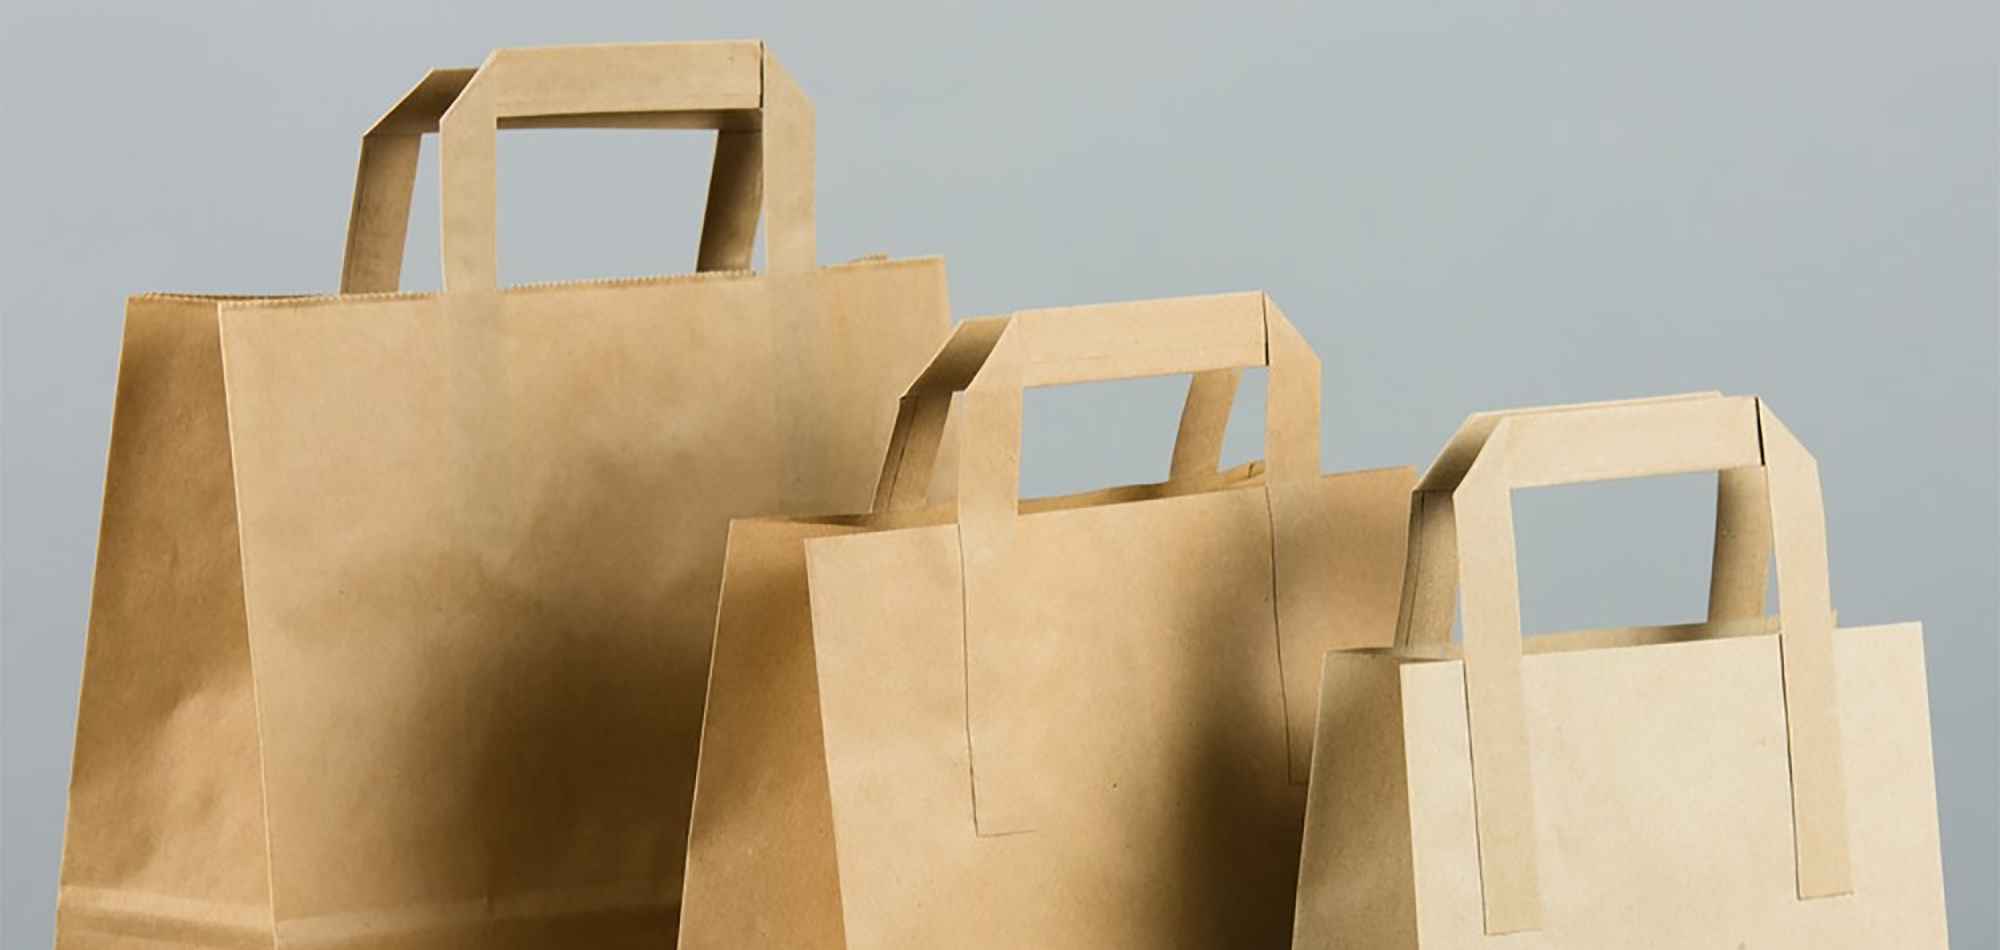 Brown Paper Carrier Bags, Carriers Bag, UK